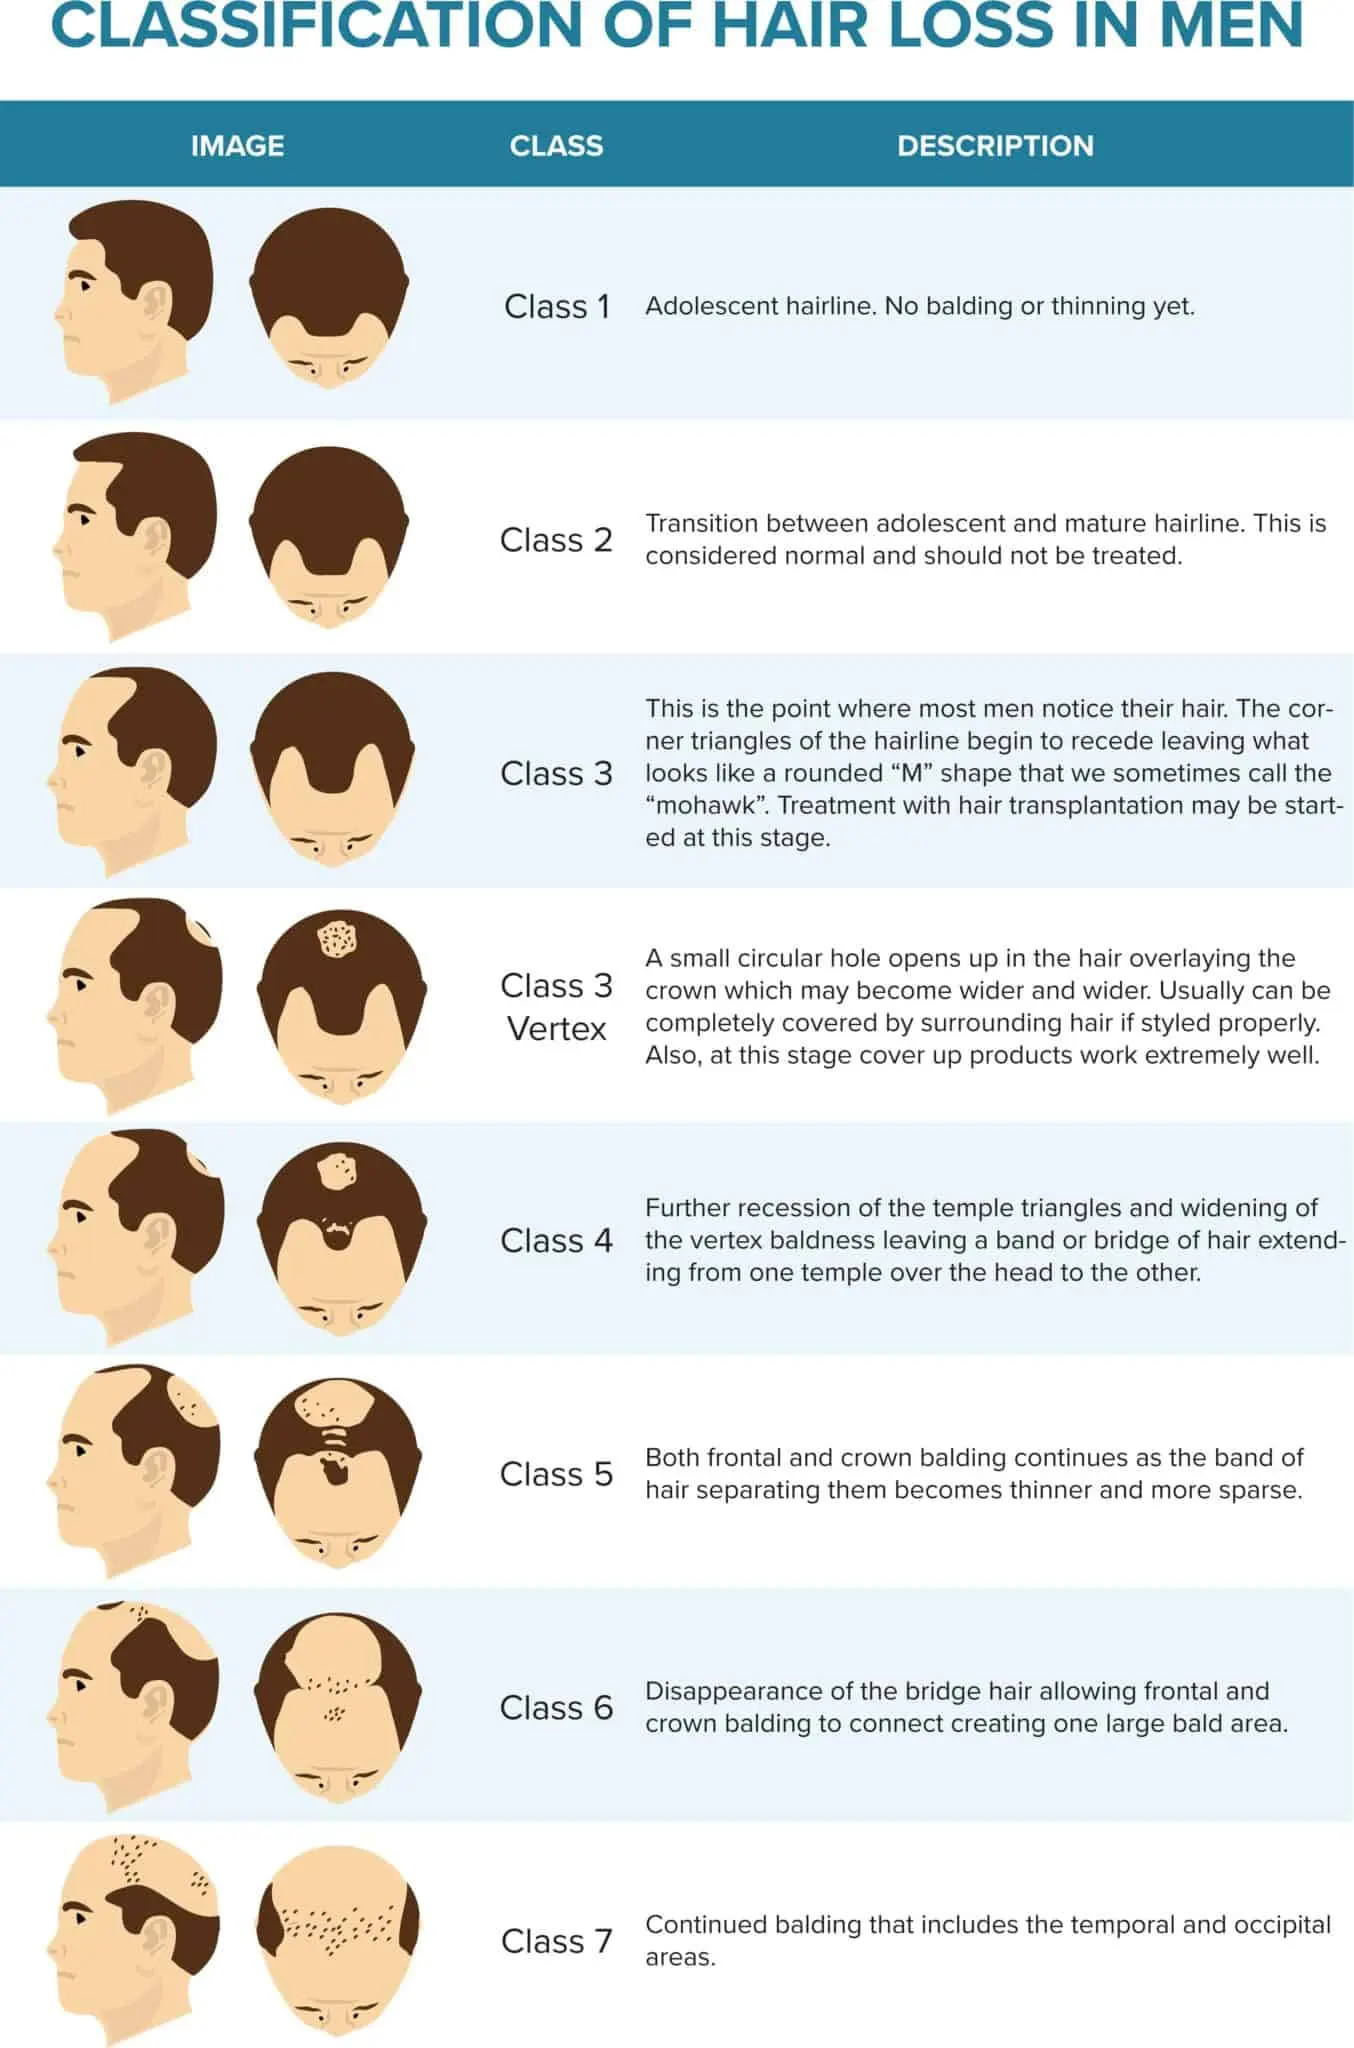 Classification of hair loss in men